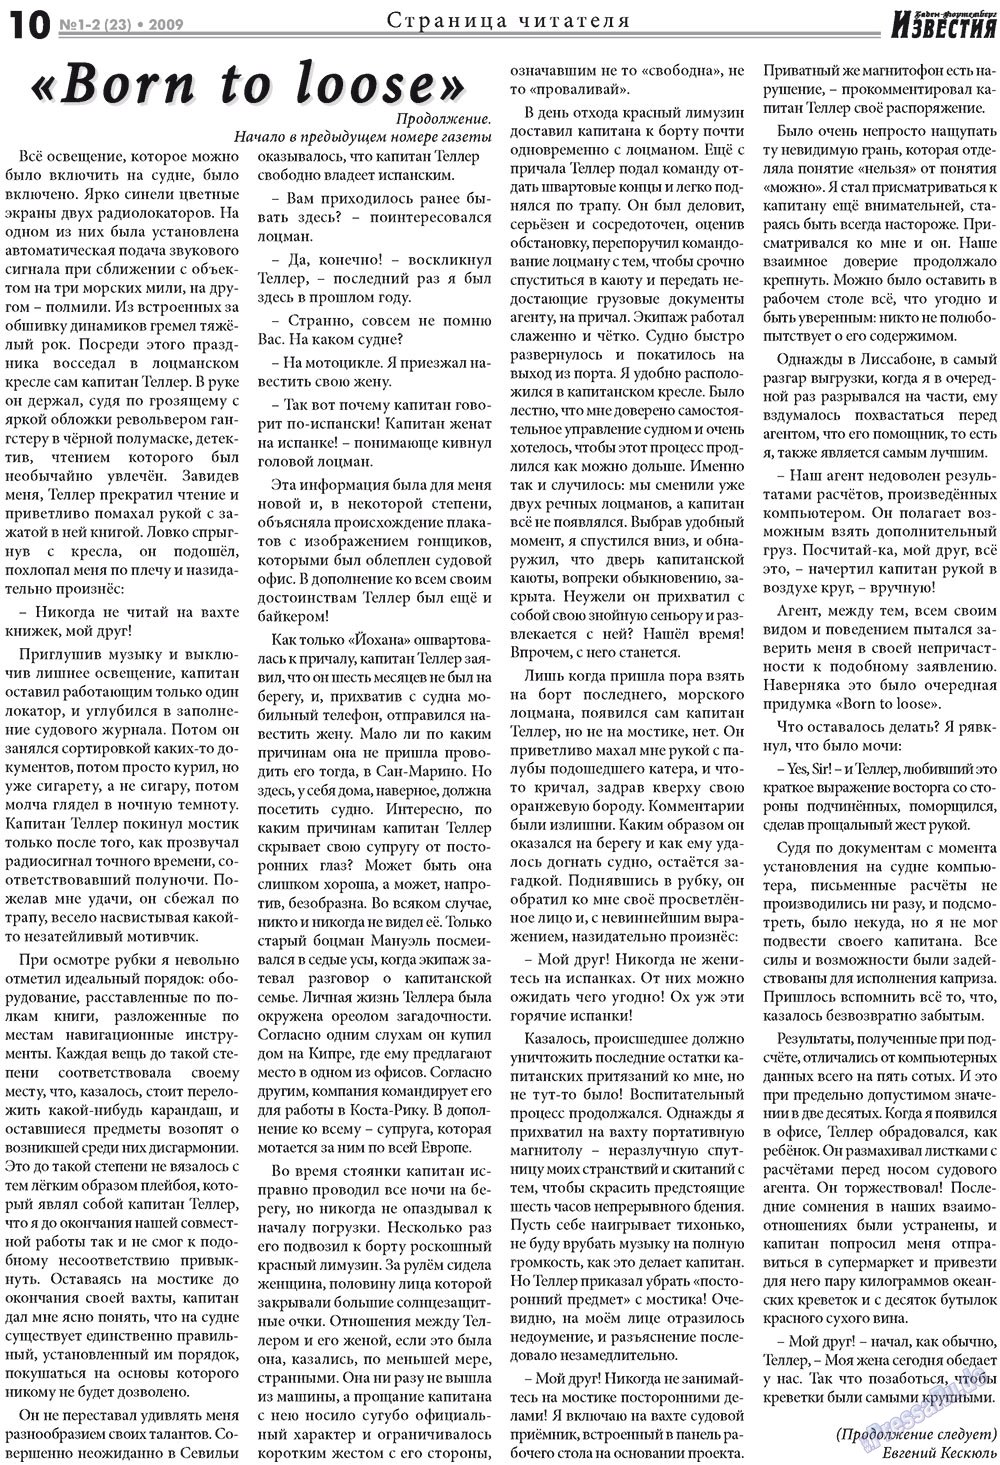 Известия BW (газета). 2009 год, номер 1, стр. 10